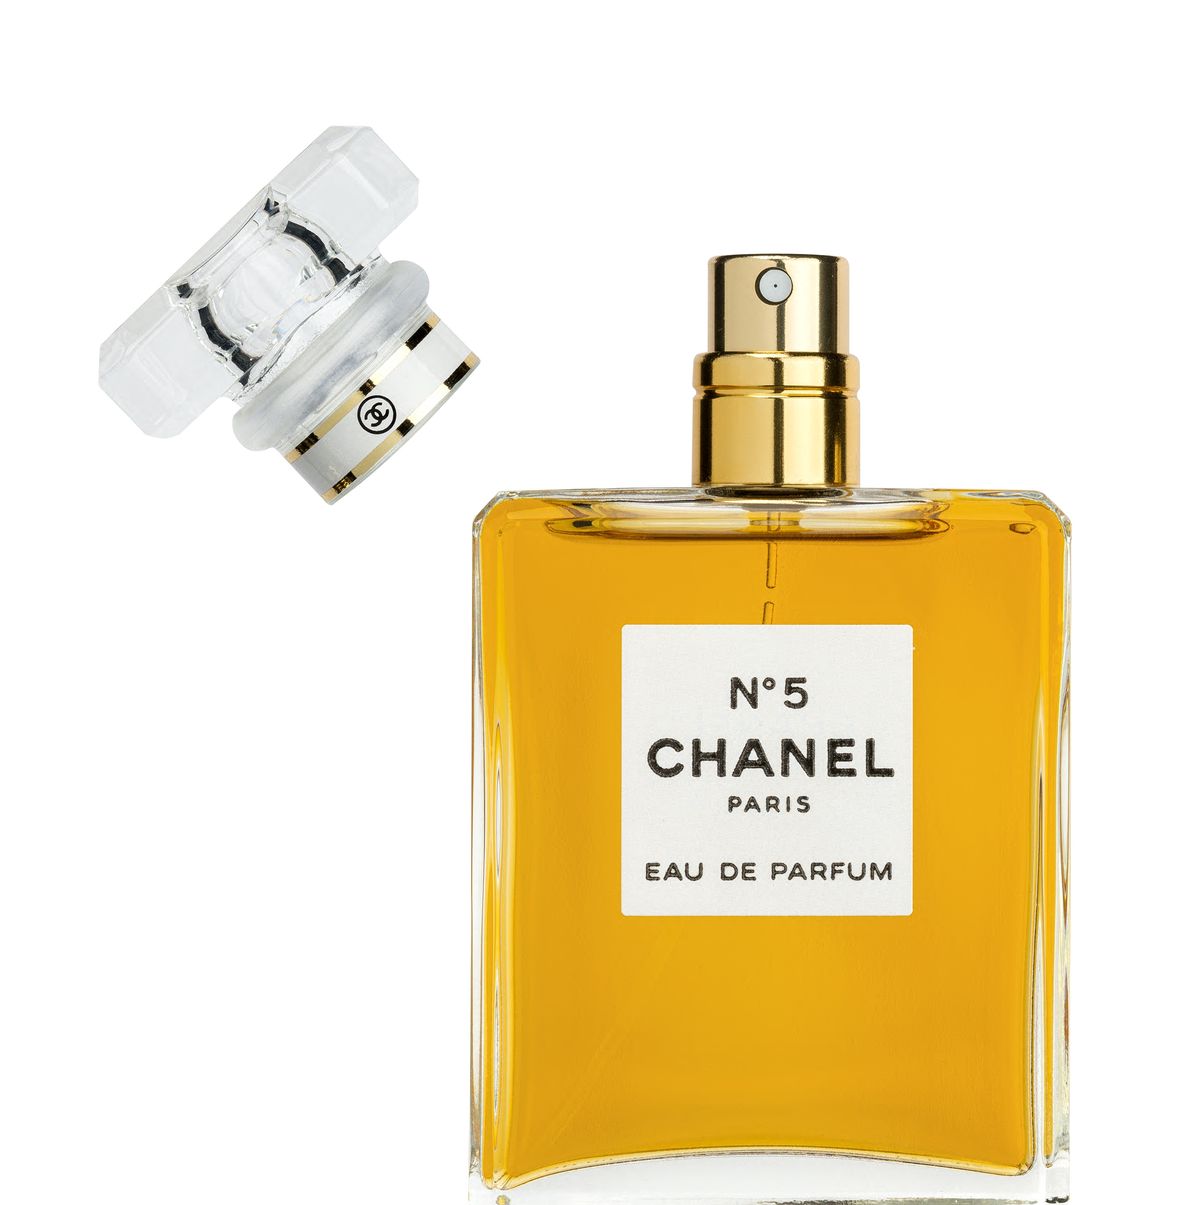 chanel no 5 perfume smells like